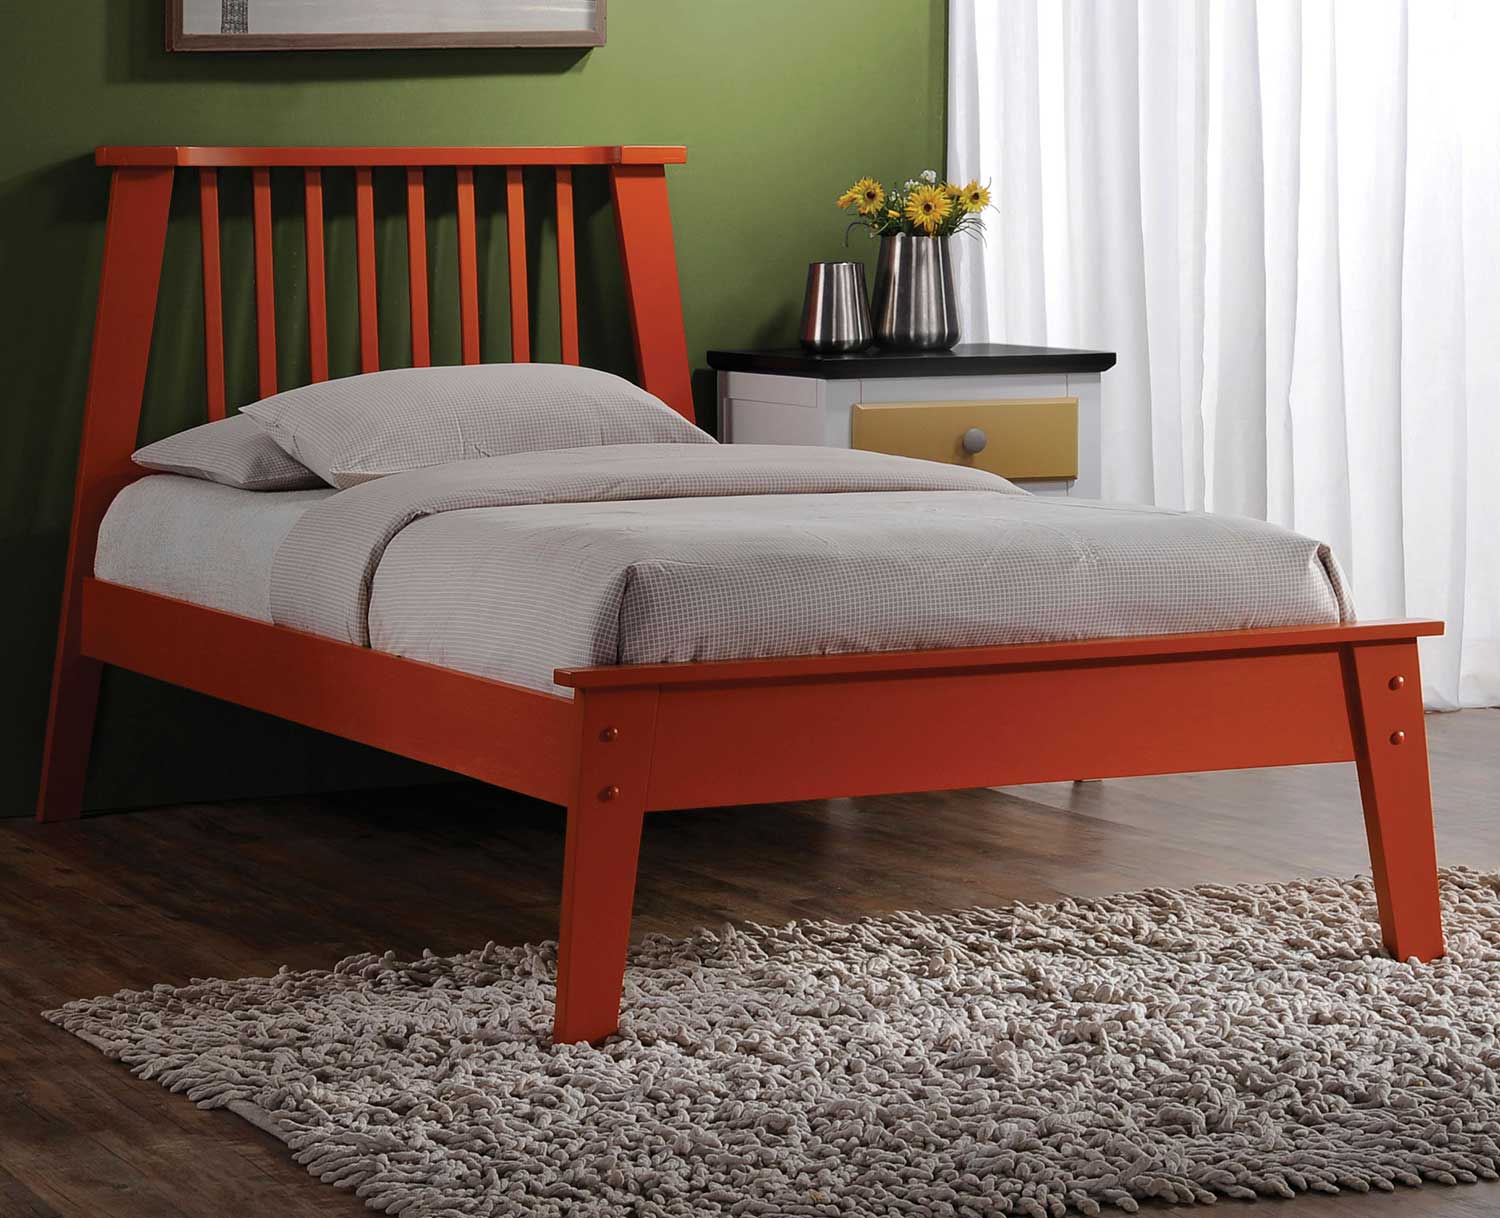 Acme Marlton Bed - Orange